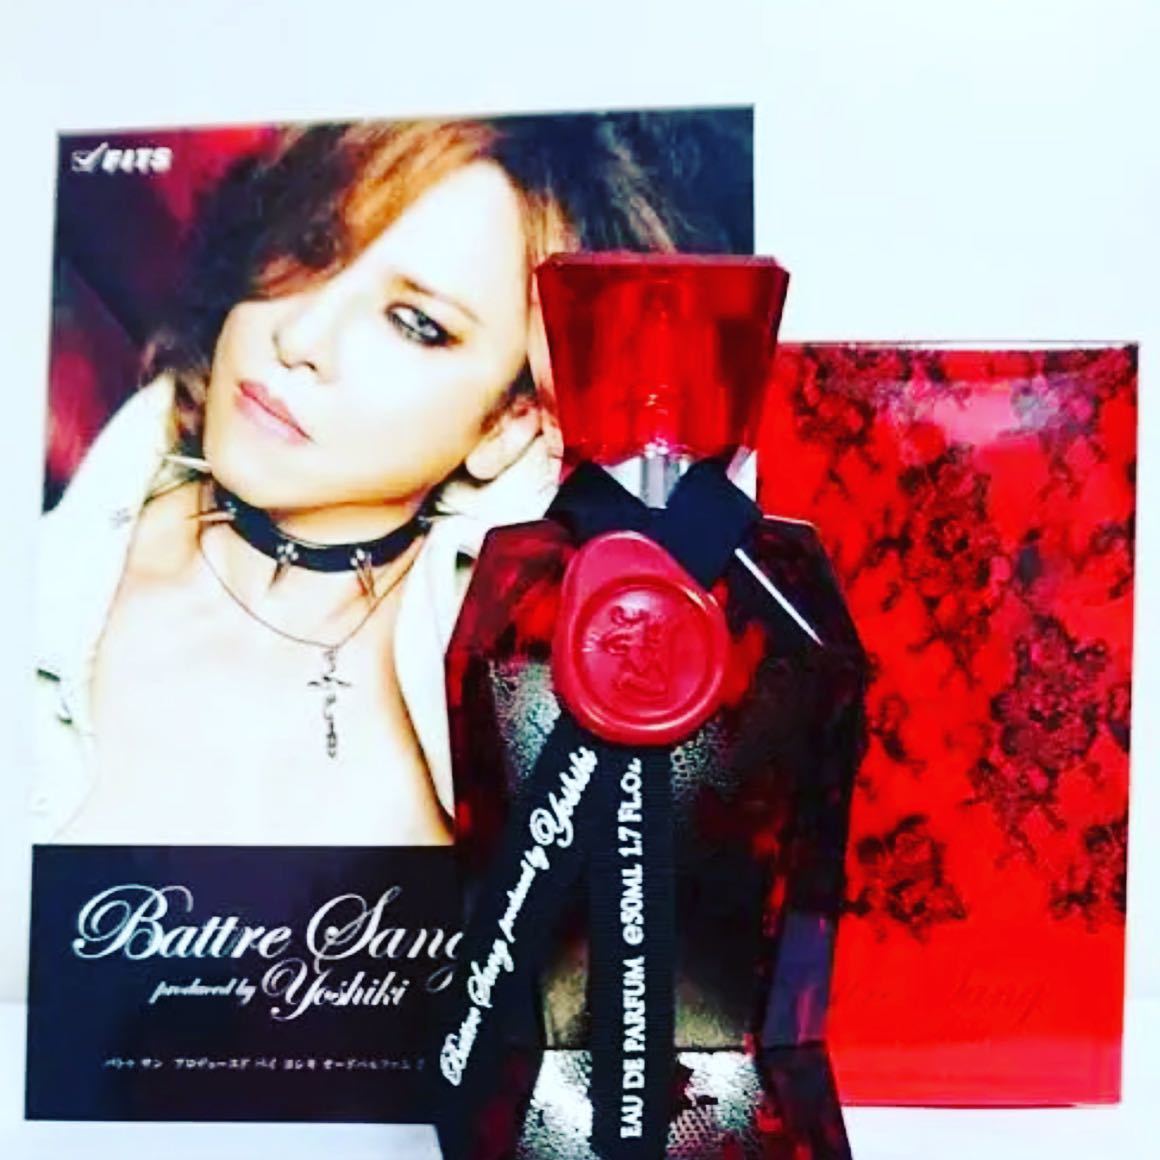 YOSHIKI 香水 バトゥサン オードパルファム X JAPANよしき 新品 